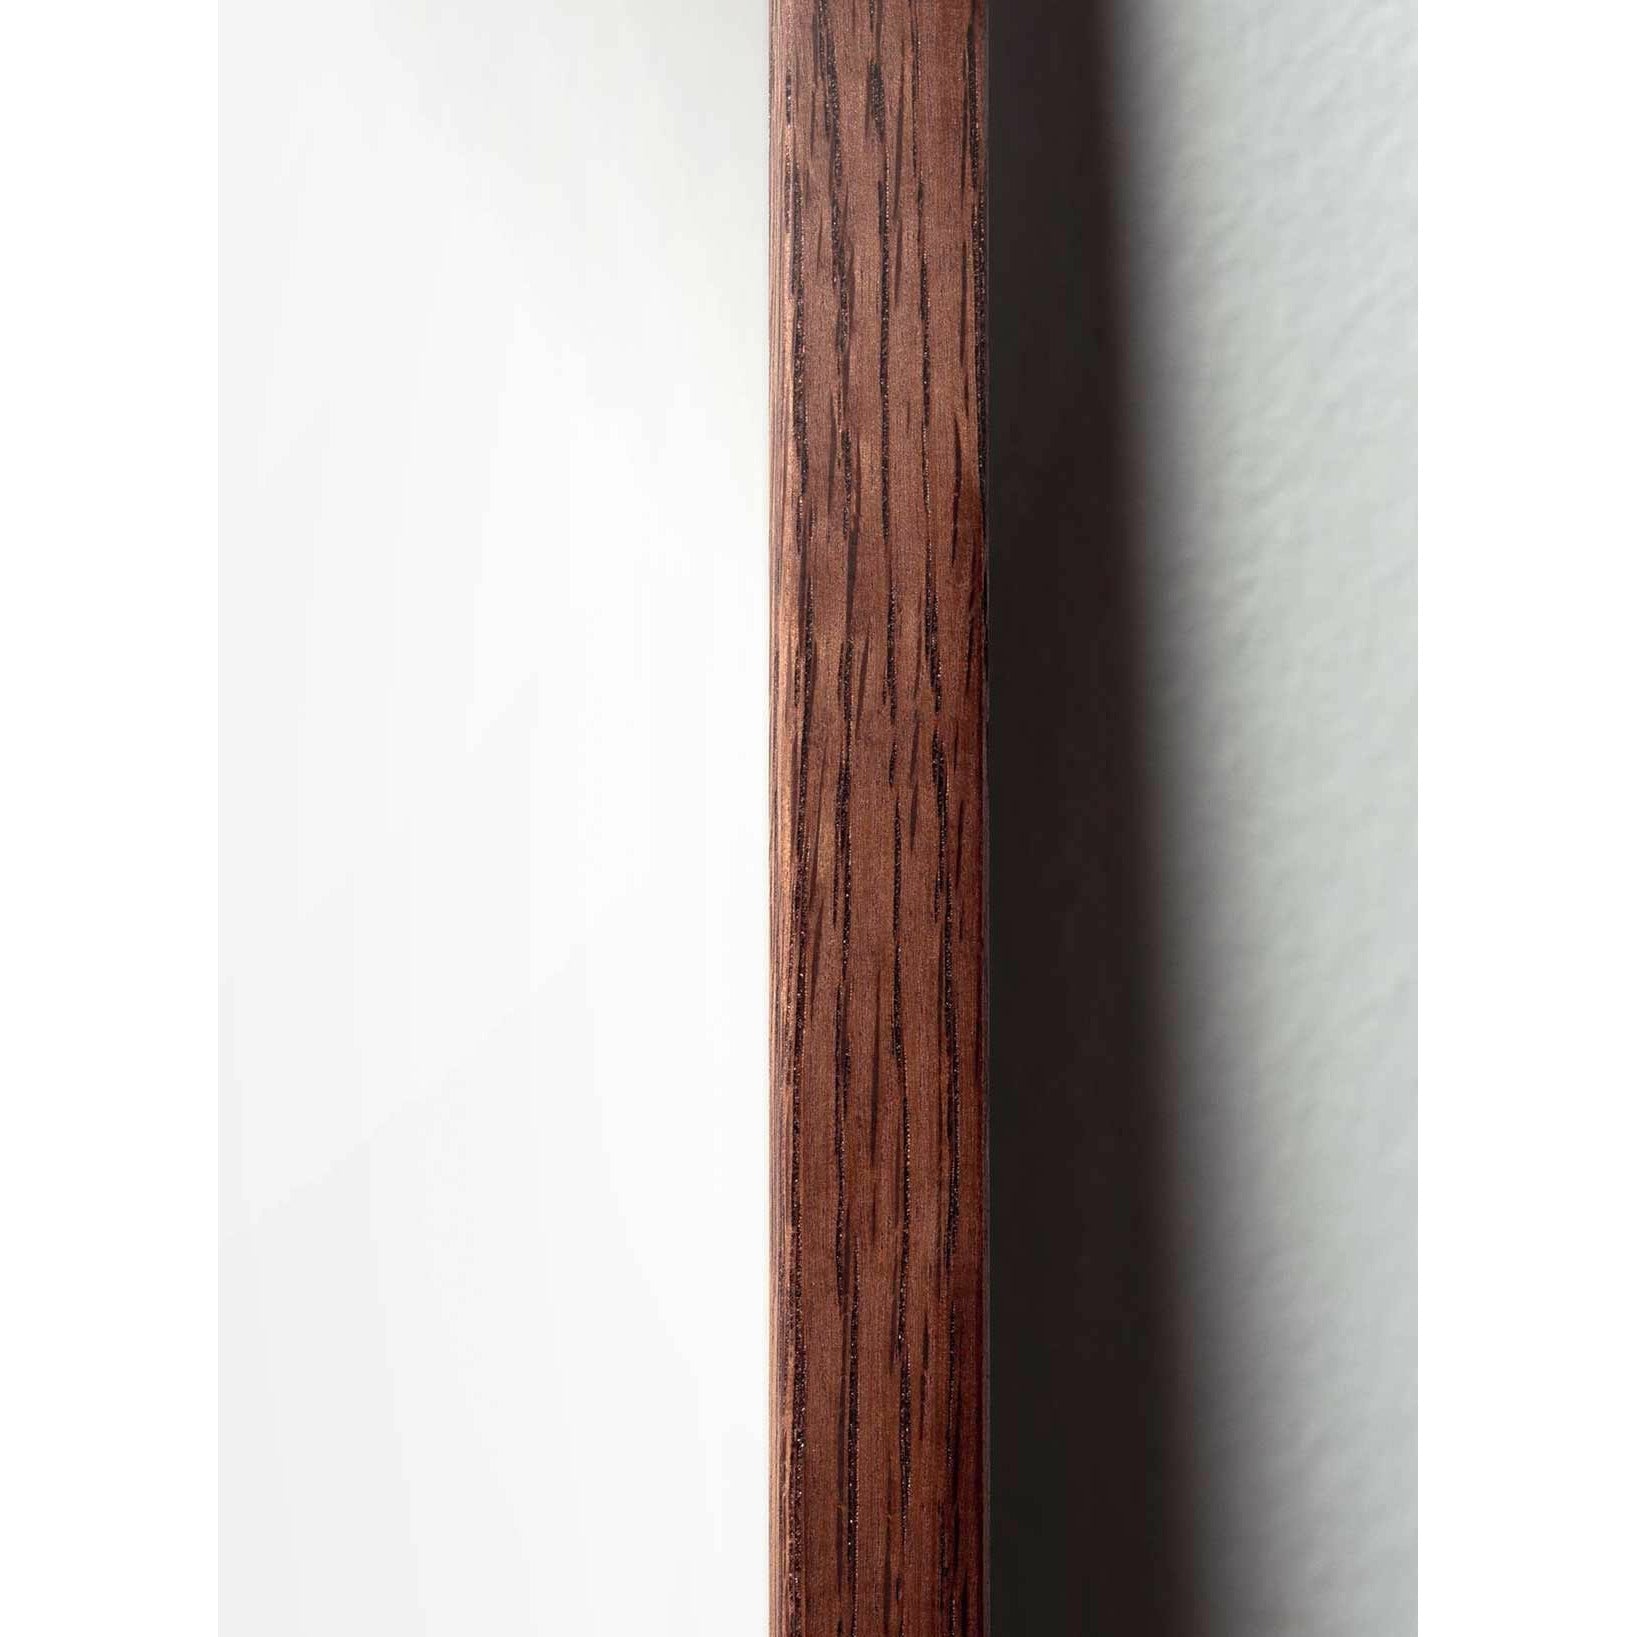 Póster clásico de Ant Ant Brainchild, marco de madera oscura 70x100 cm, fondo blanco